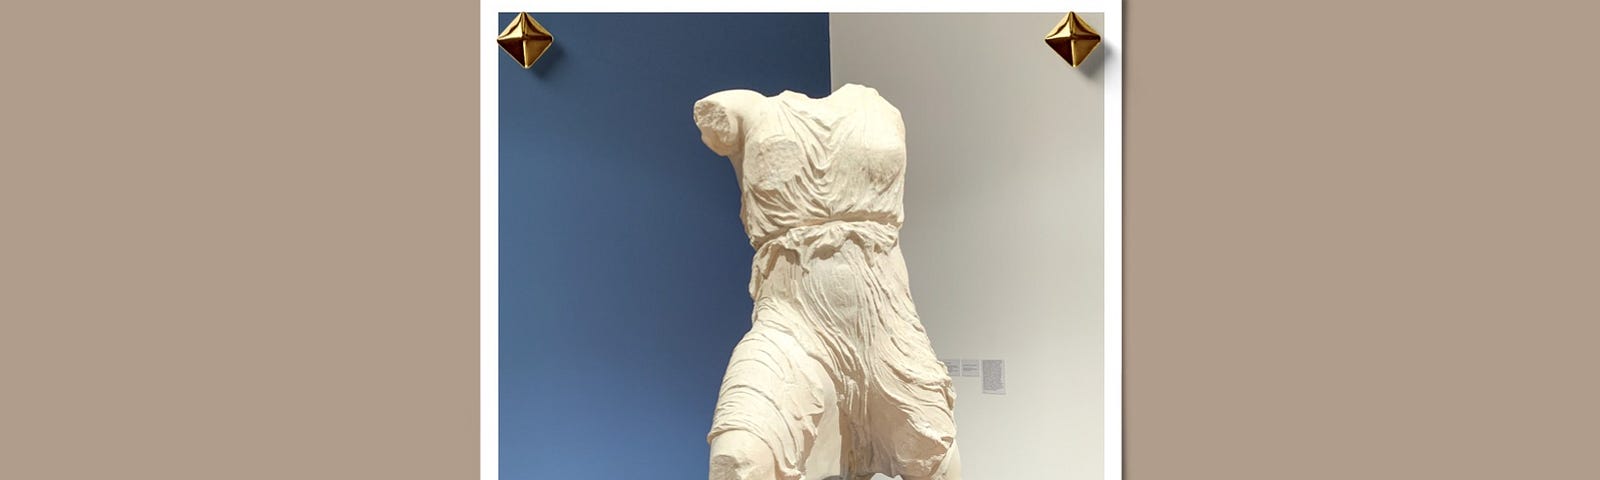 a photo of the statue “Figura femenina en movimiento” (Female figure in motion), described in the article.